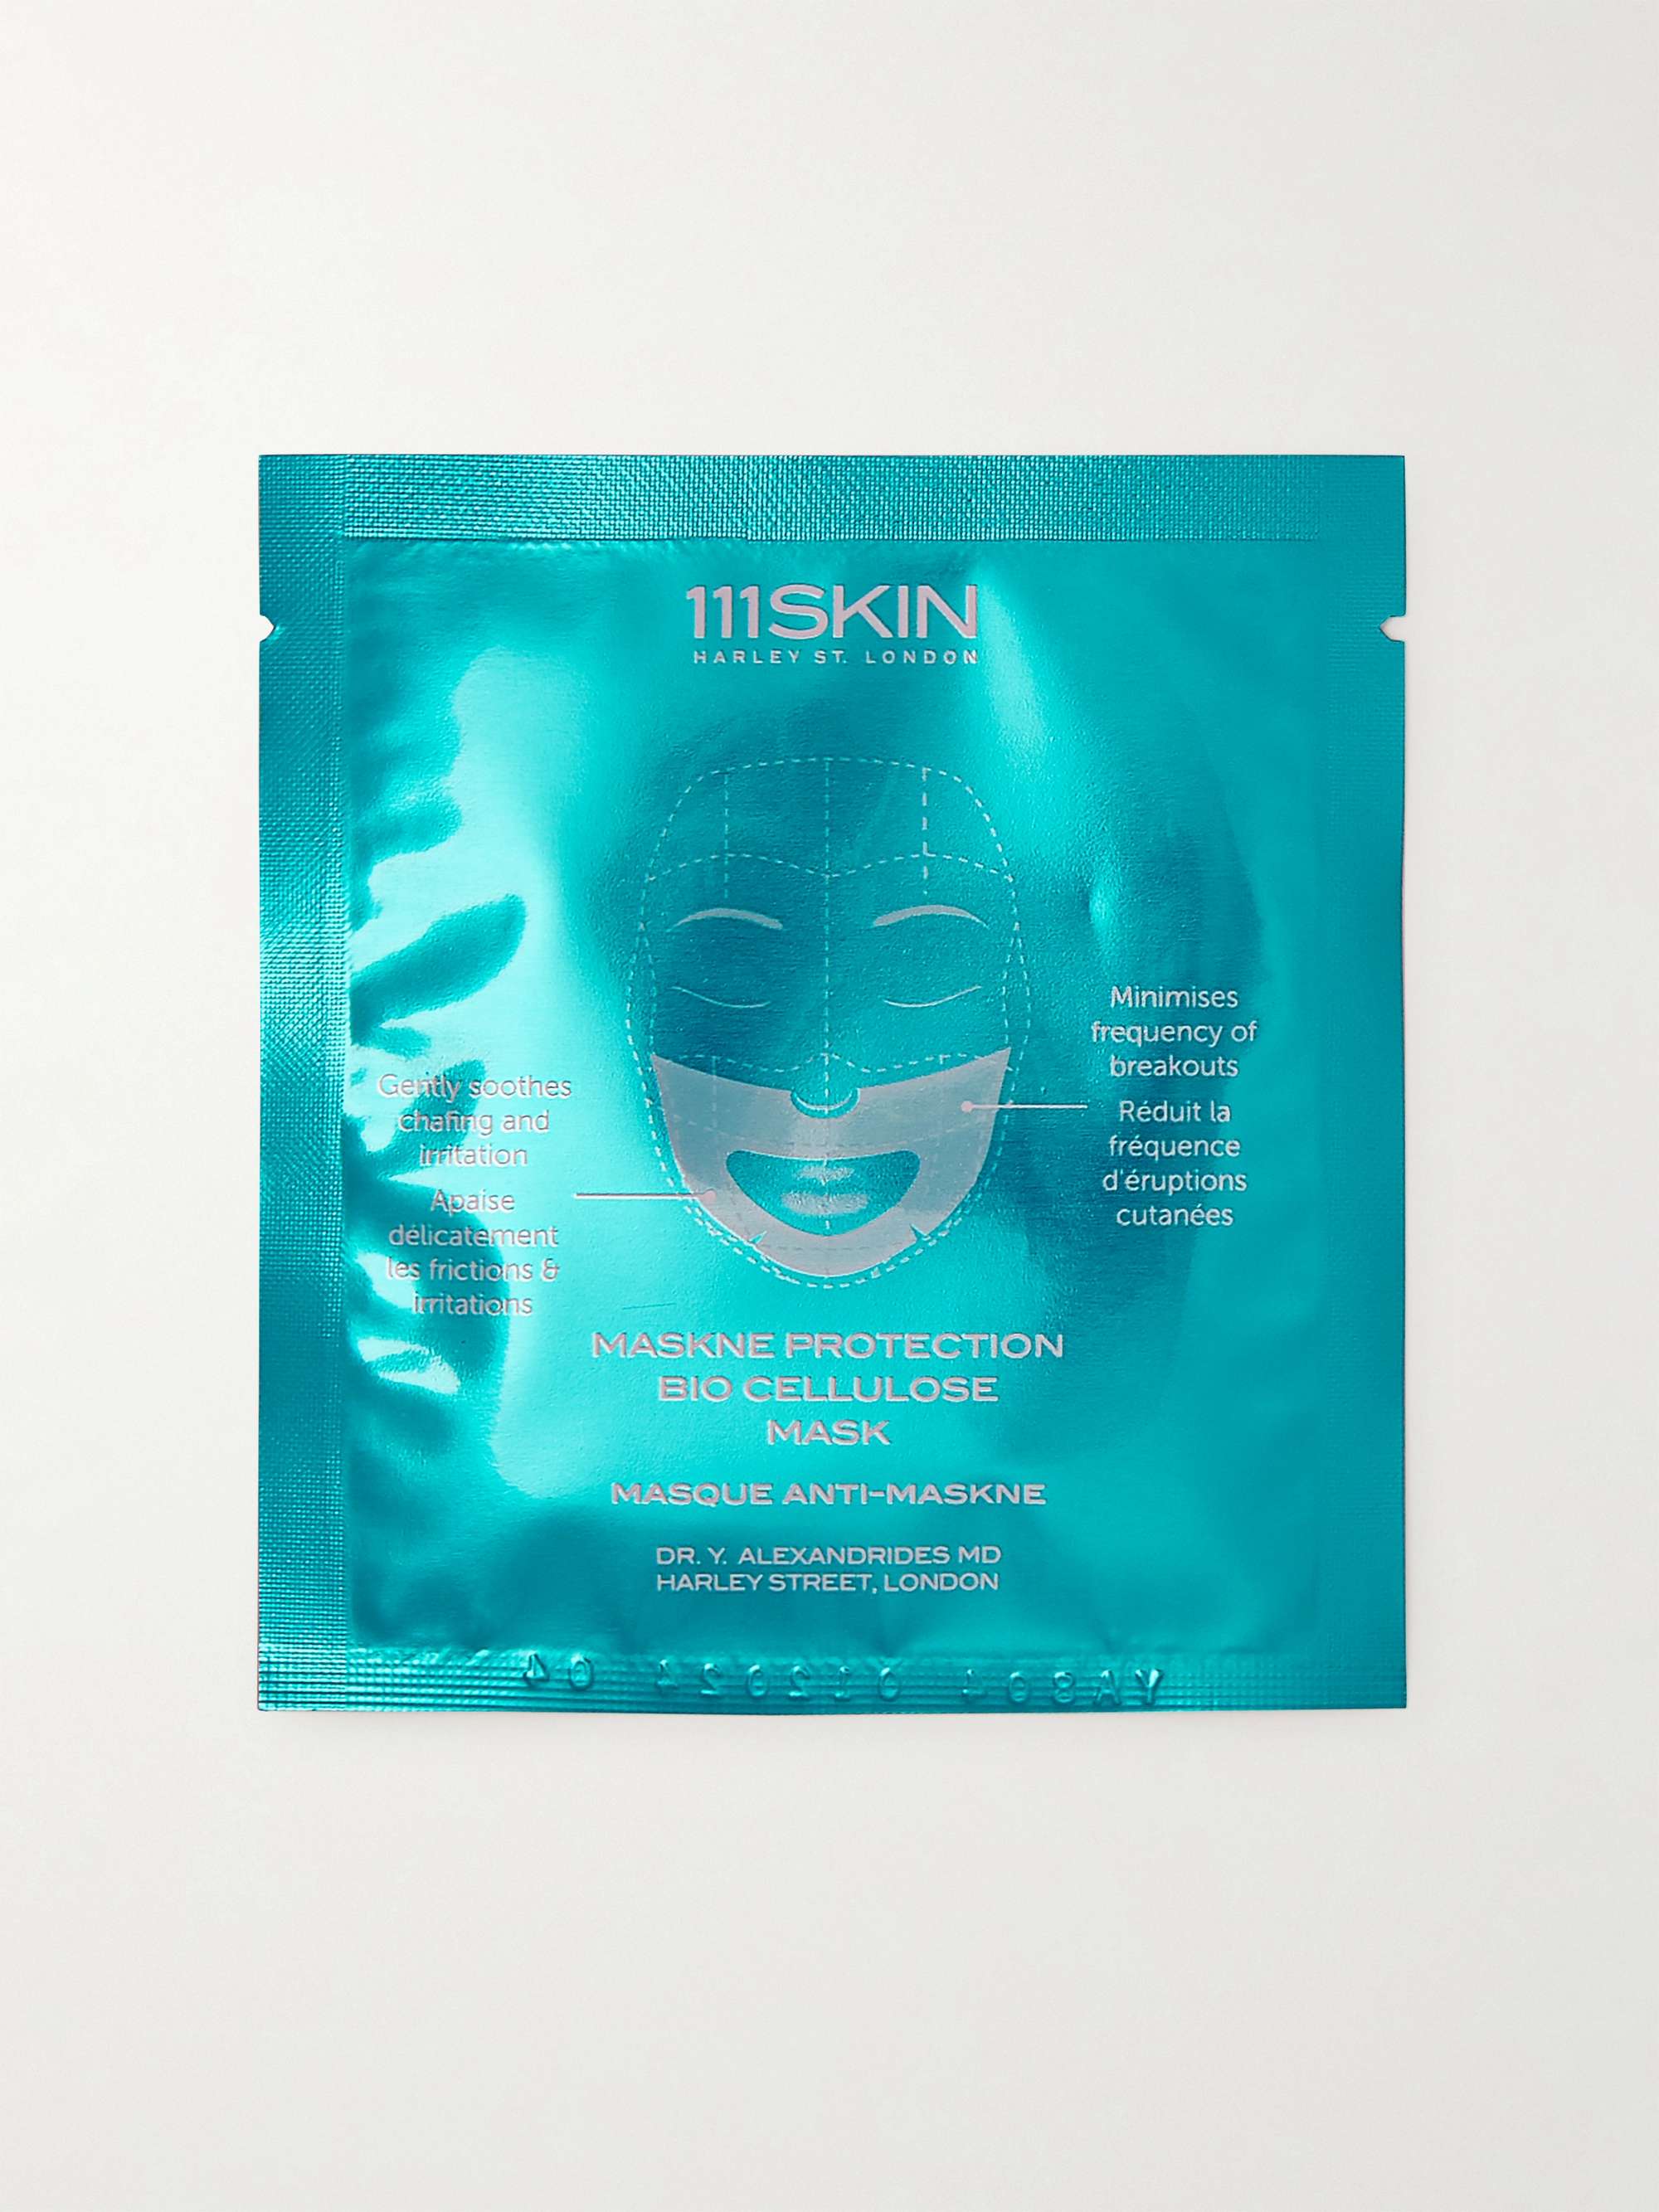 111SKIN Maskne Protection Bio-Cellulose Mask, 5 x 10ml